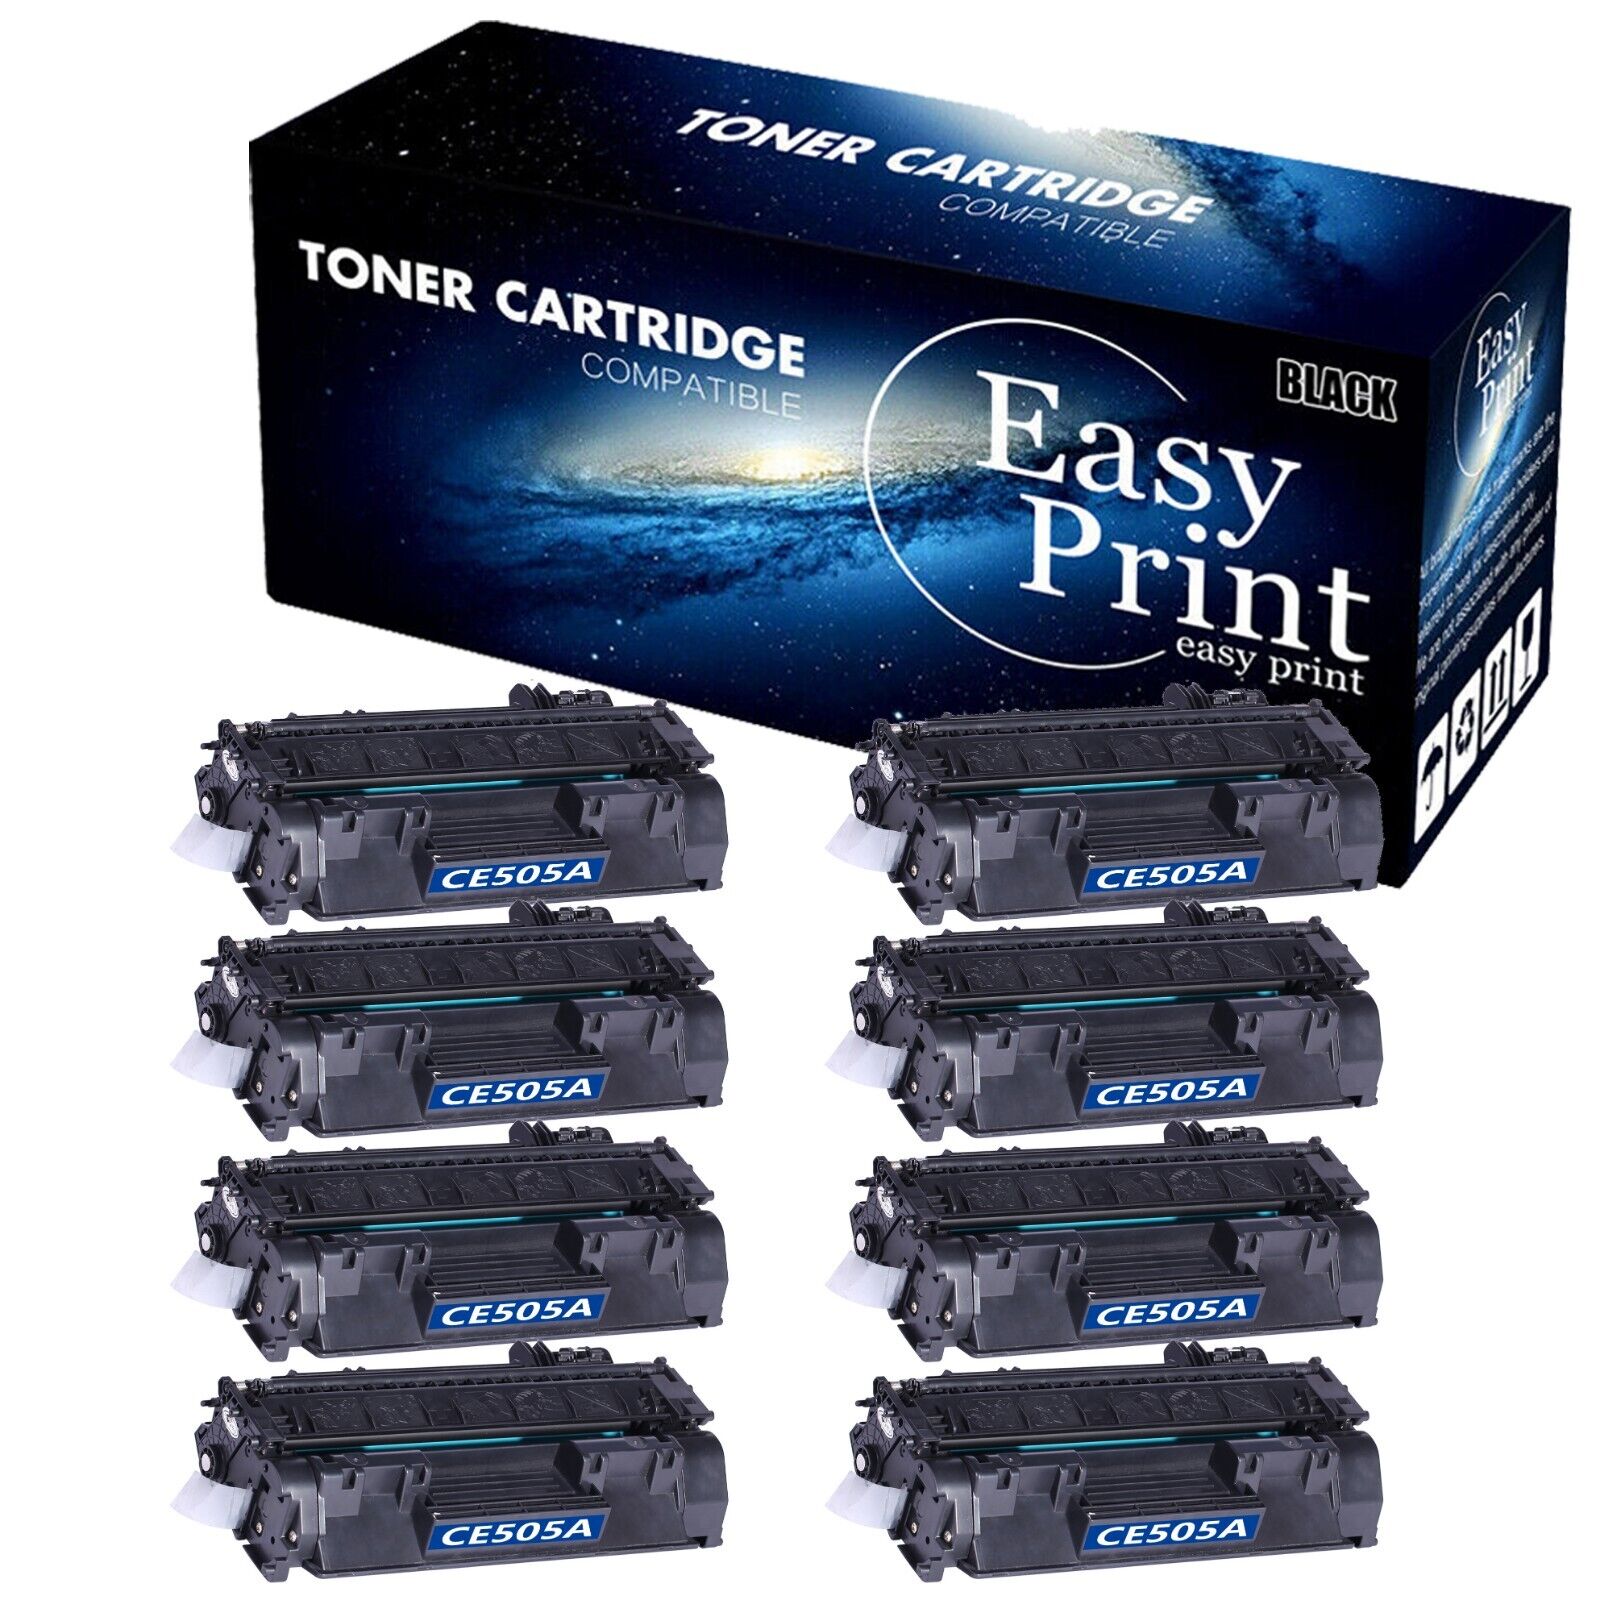 8 Pack CE505A 05A Toner Cartridge 505A for 2055d 2055n 2055x Printer